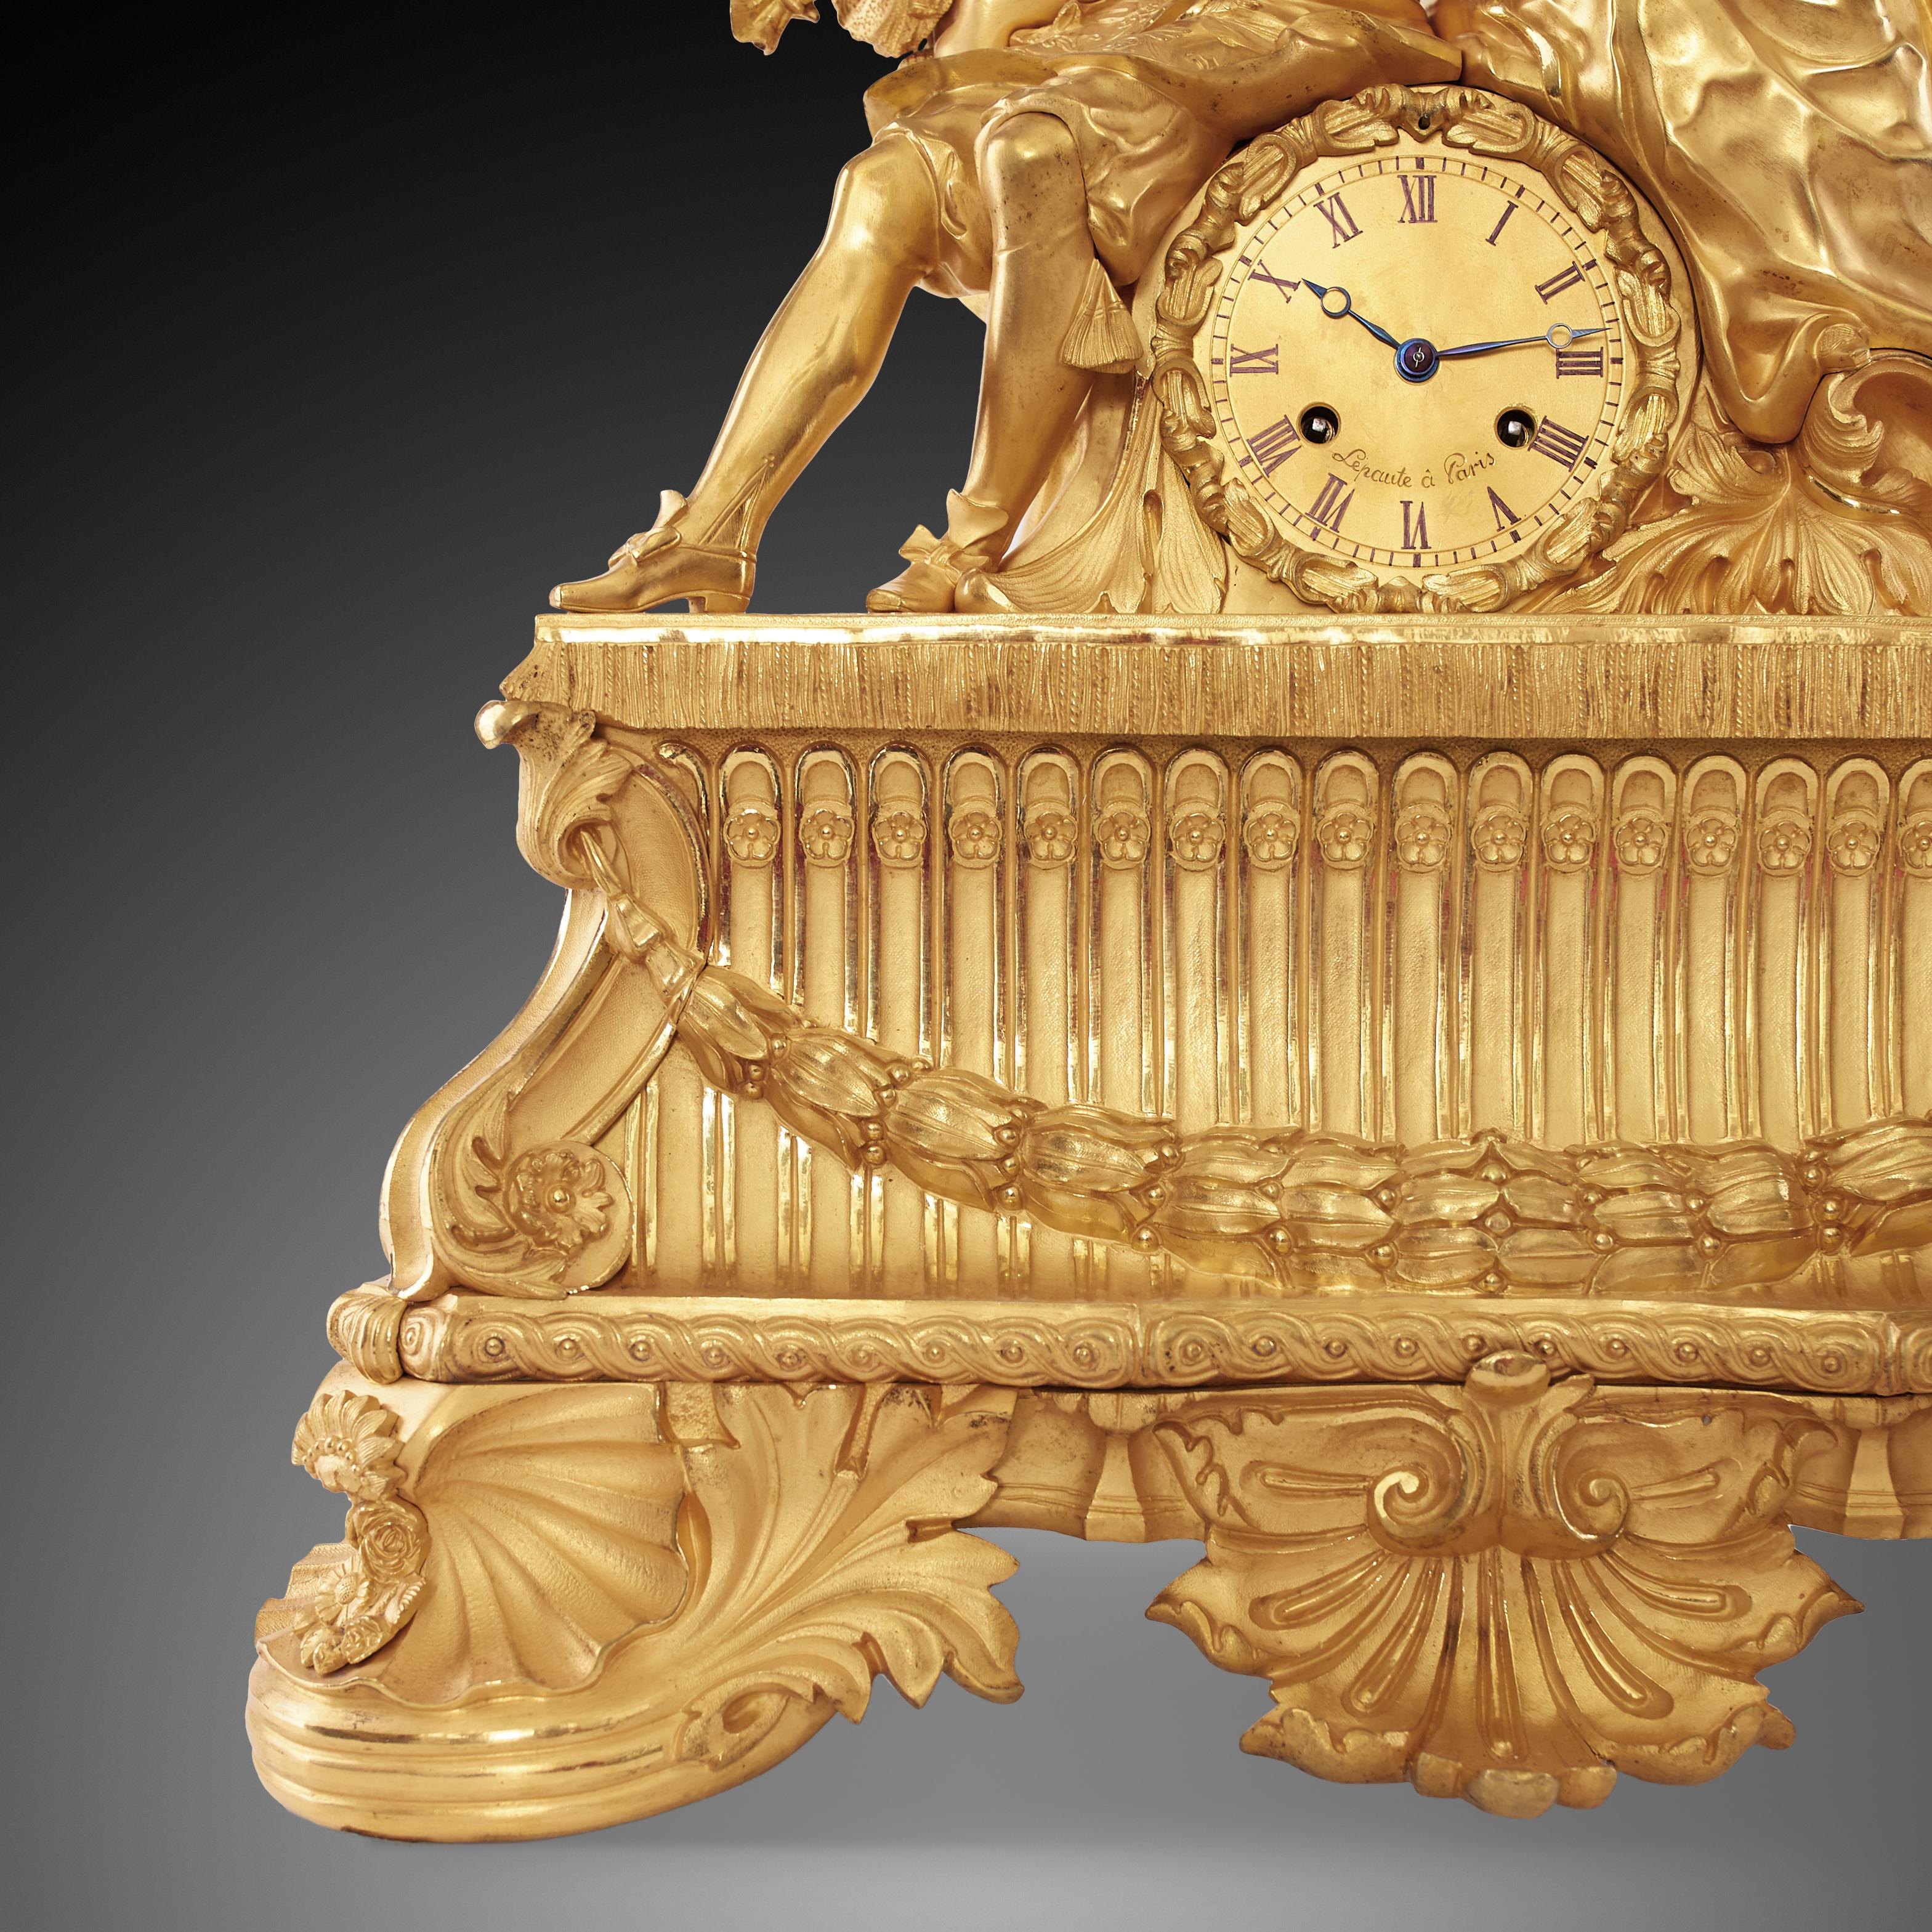 18th Century Mental Clock Lepatue a Paris